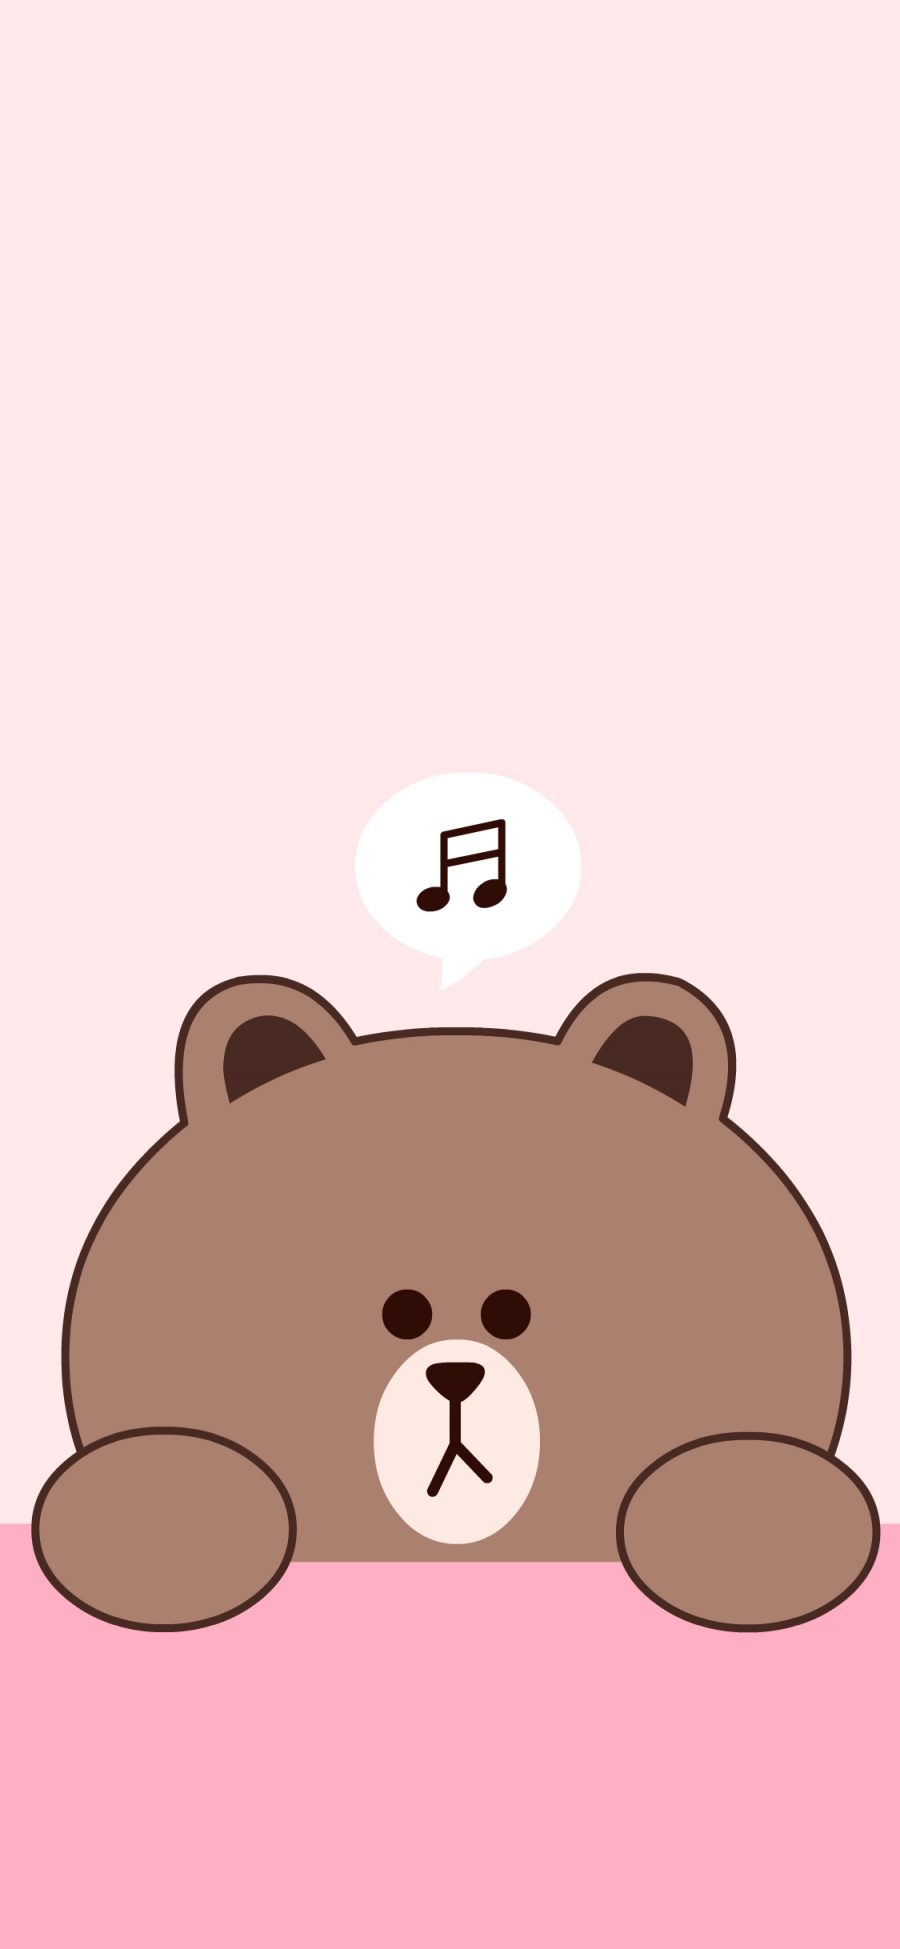 [2436×1125]line friends 布朗熊 卡通 可爱 粉色 音符 苹果手机动漫壁纸图片